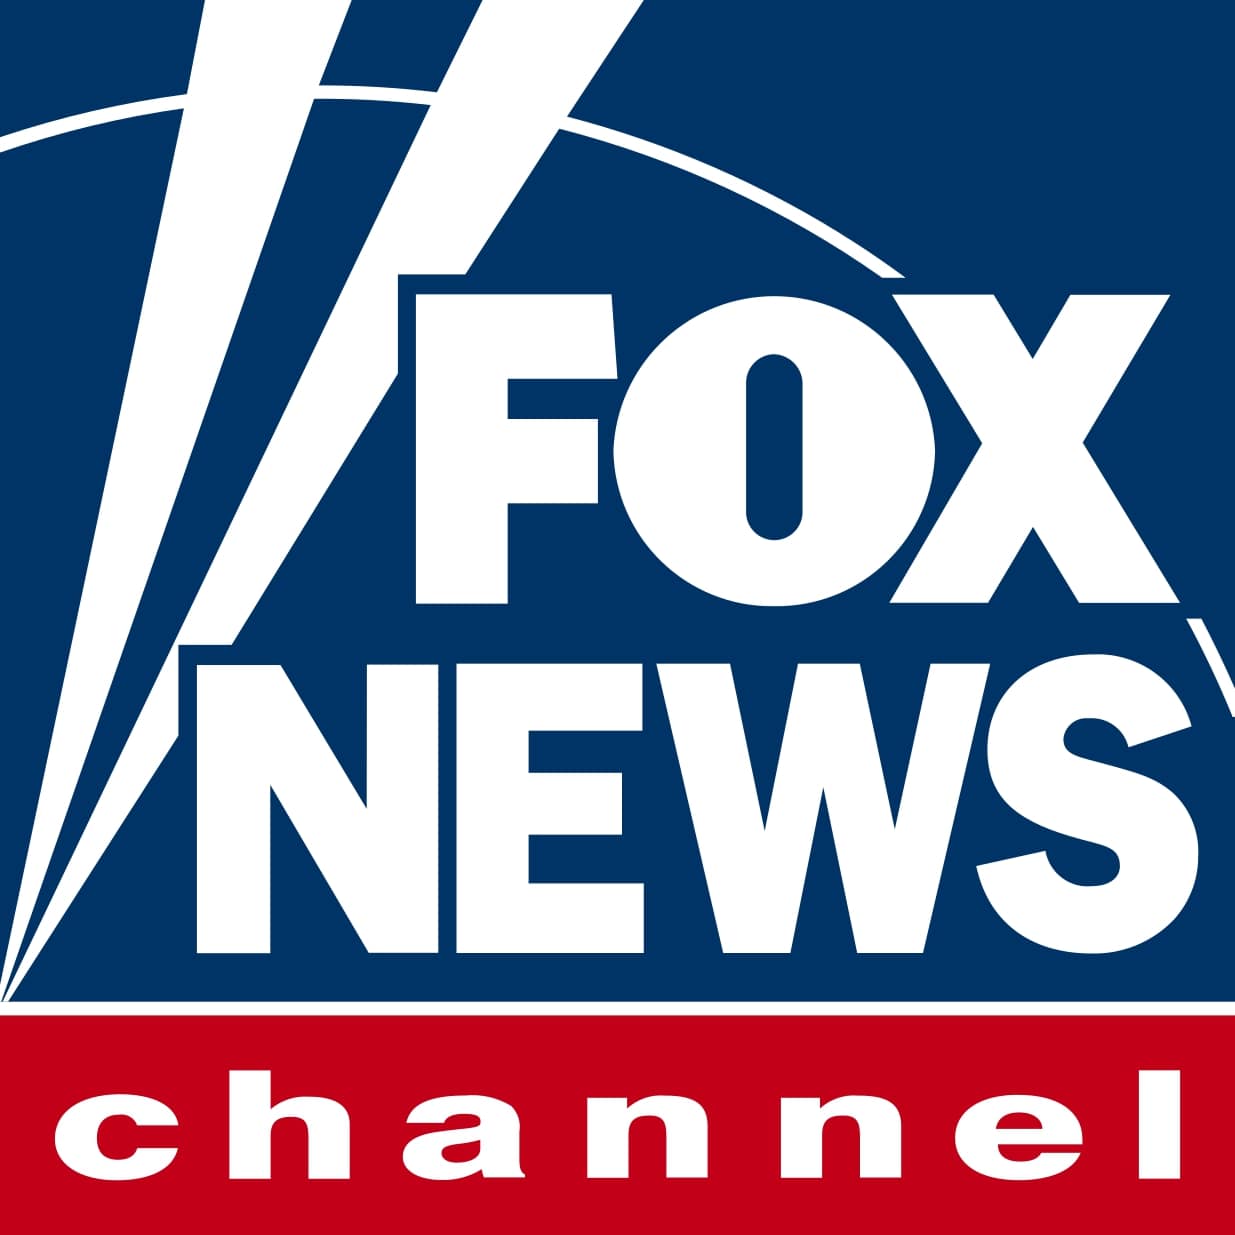 How Fox News Changed the World